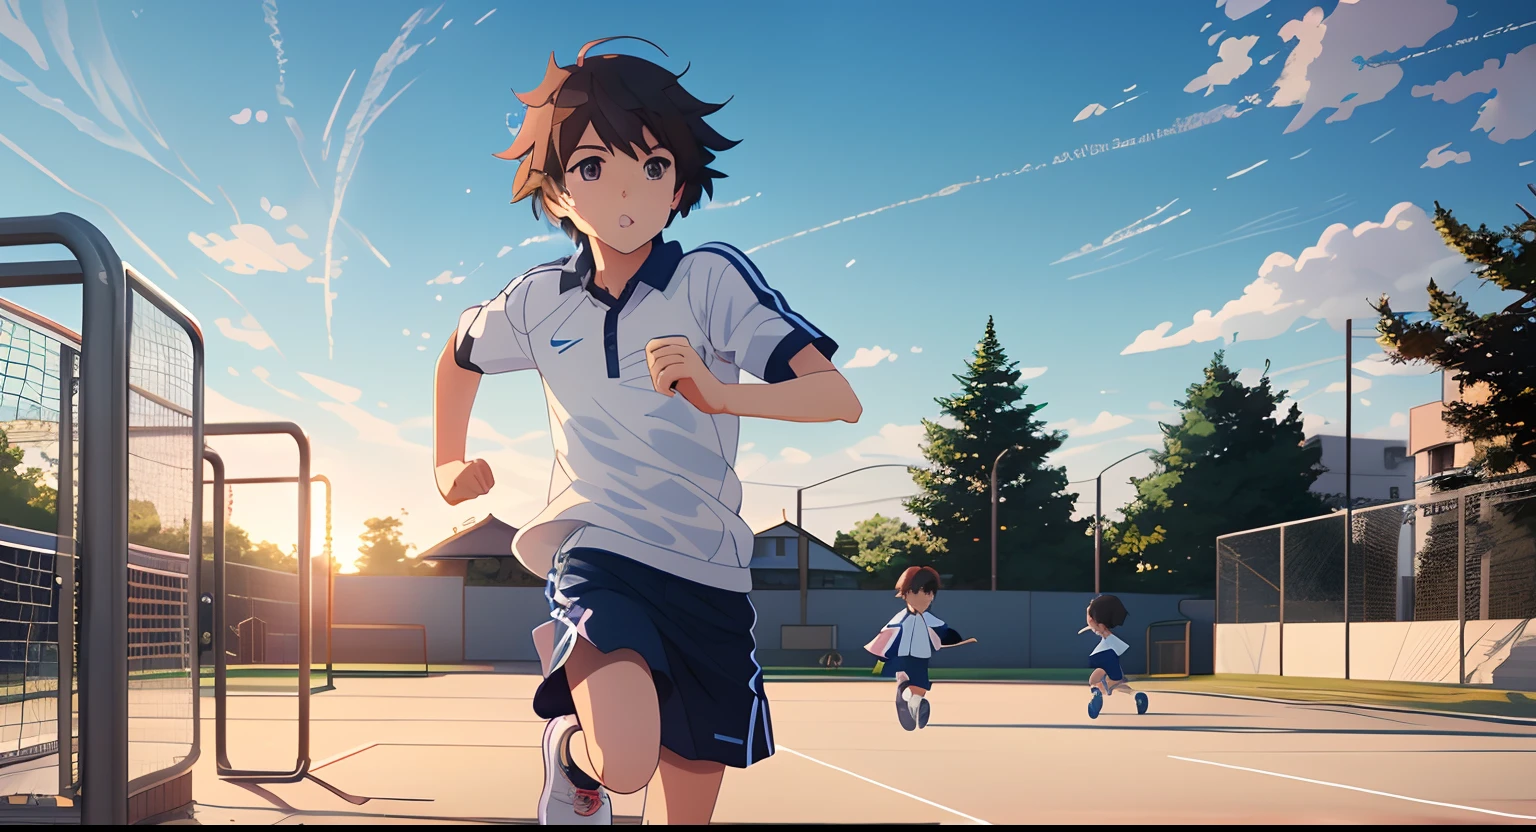 Anime Girl Cartoon Character Running Jogging Stock Illustration 1610044159  | Shutterstock